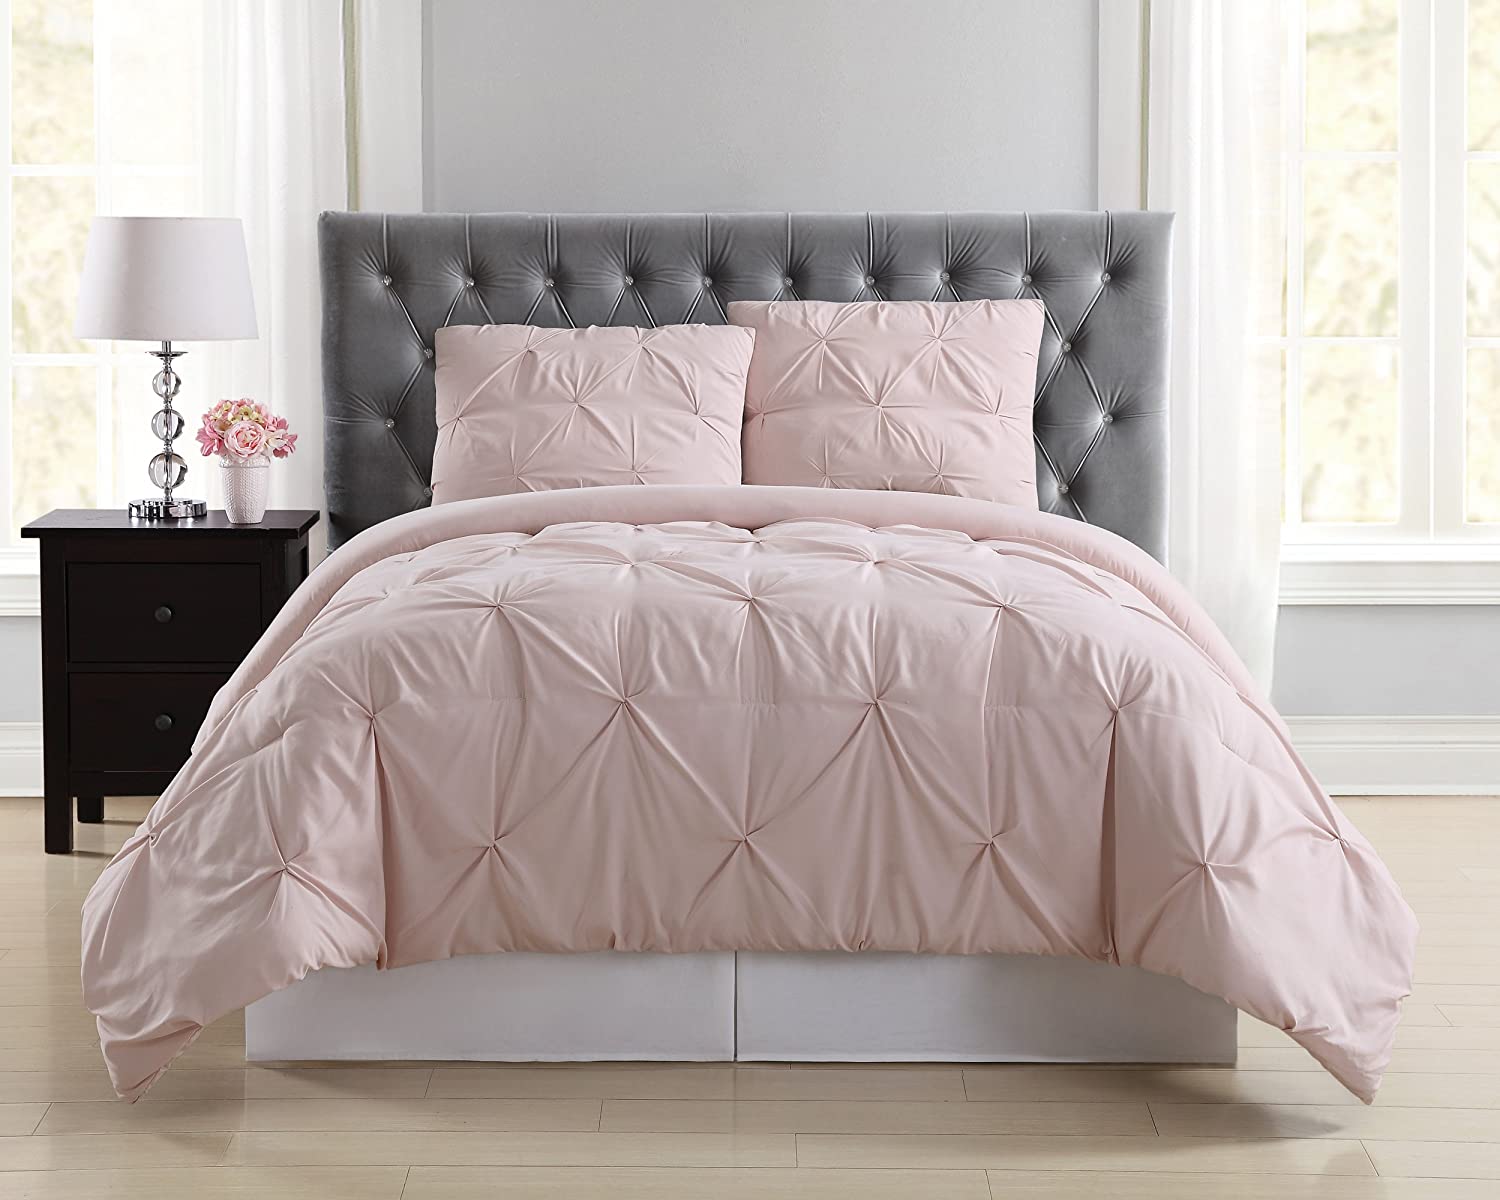 Truly Soft Everyday Pleated Comforter Set, King, Blush | eBay